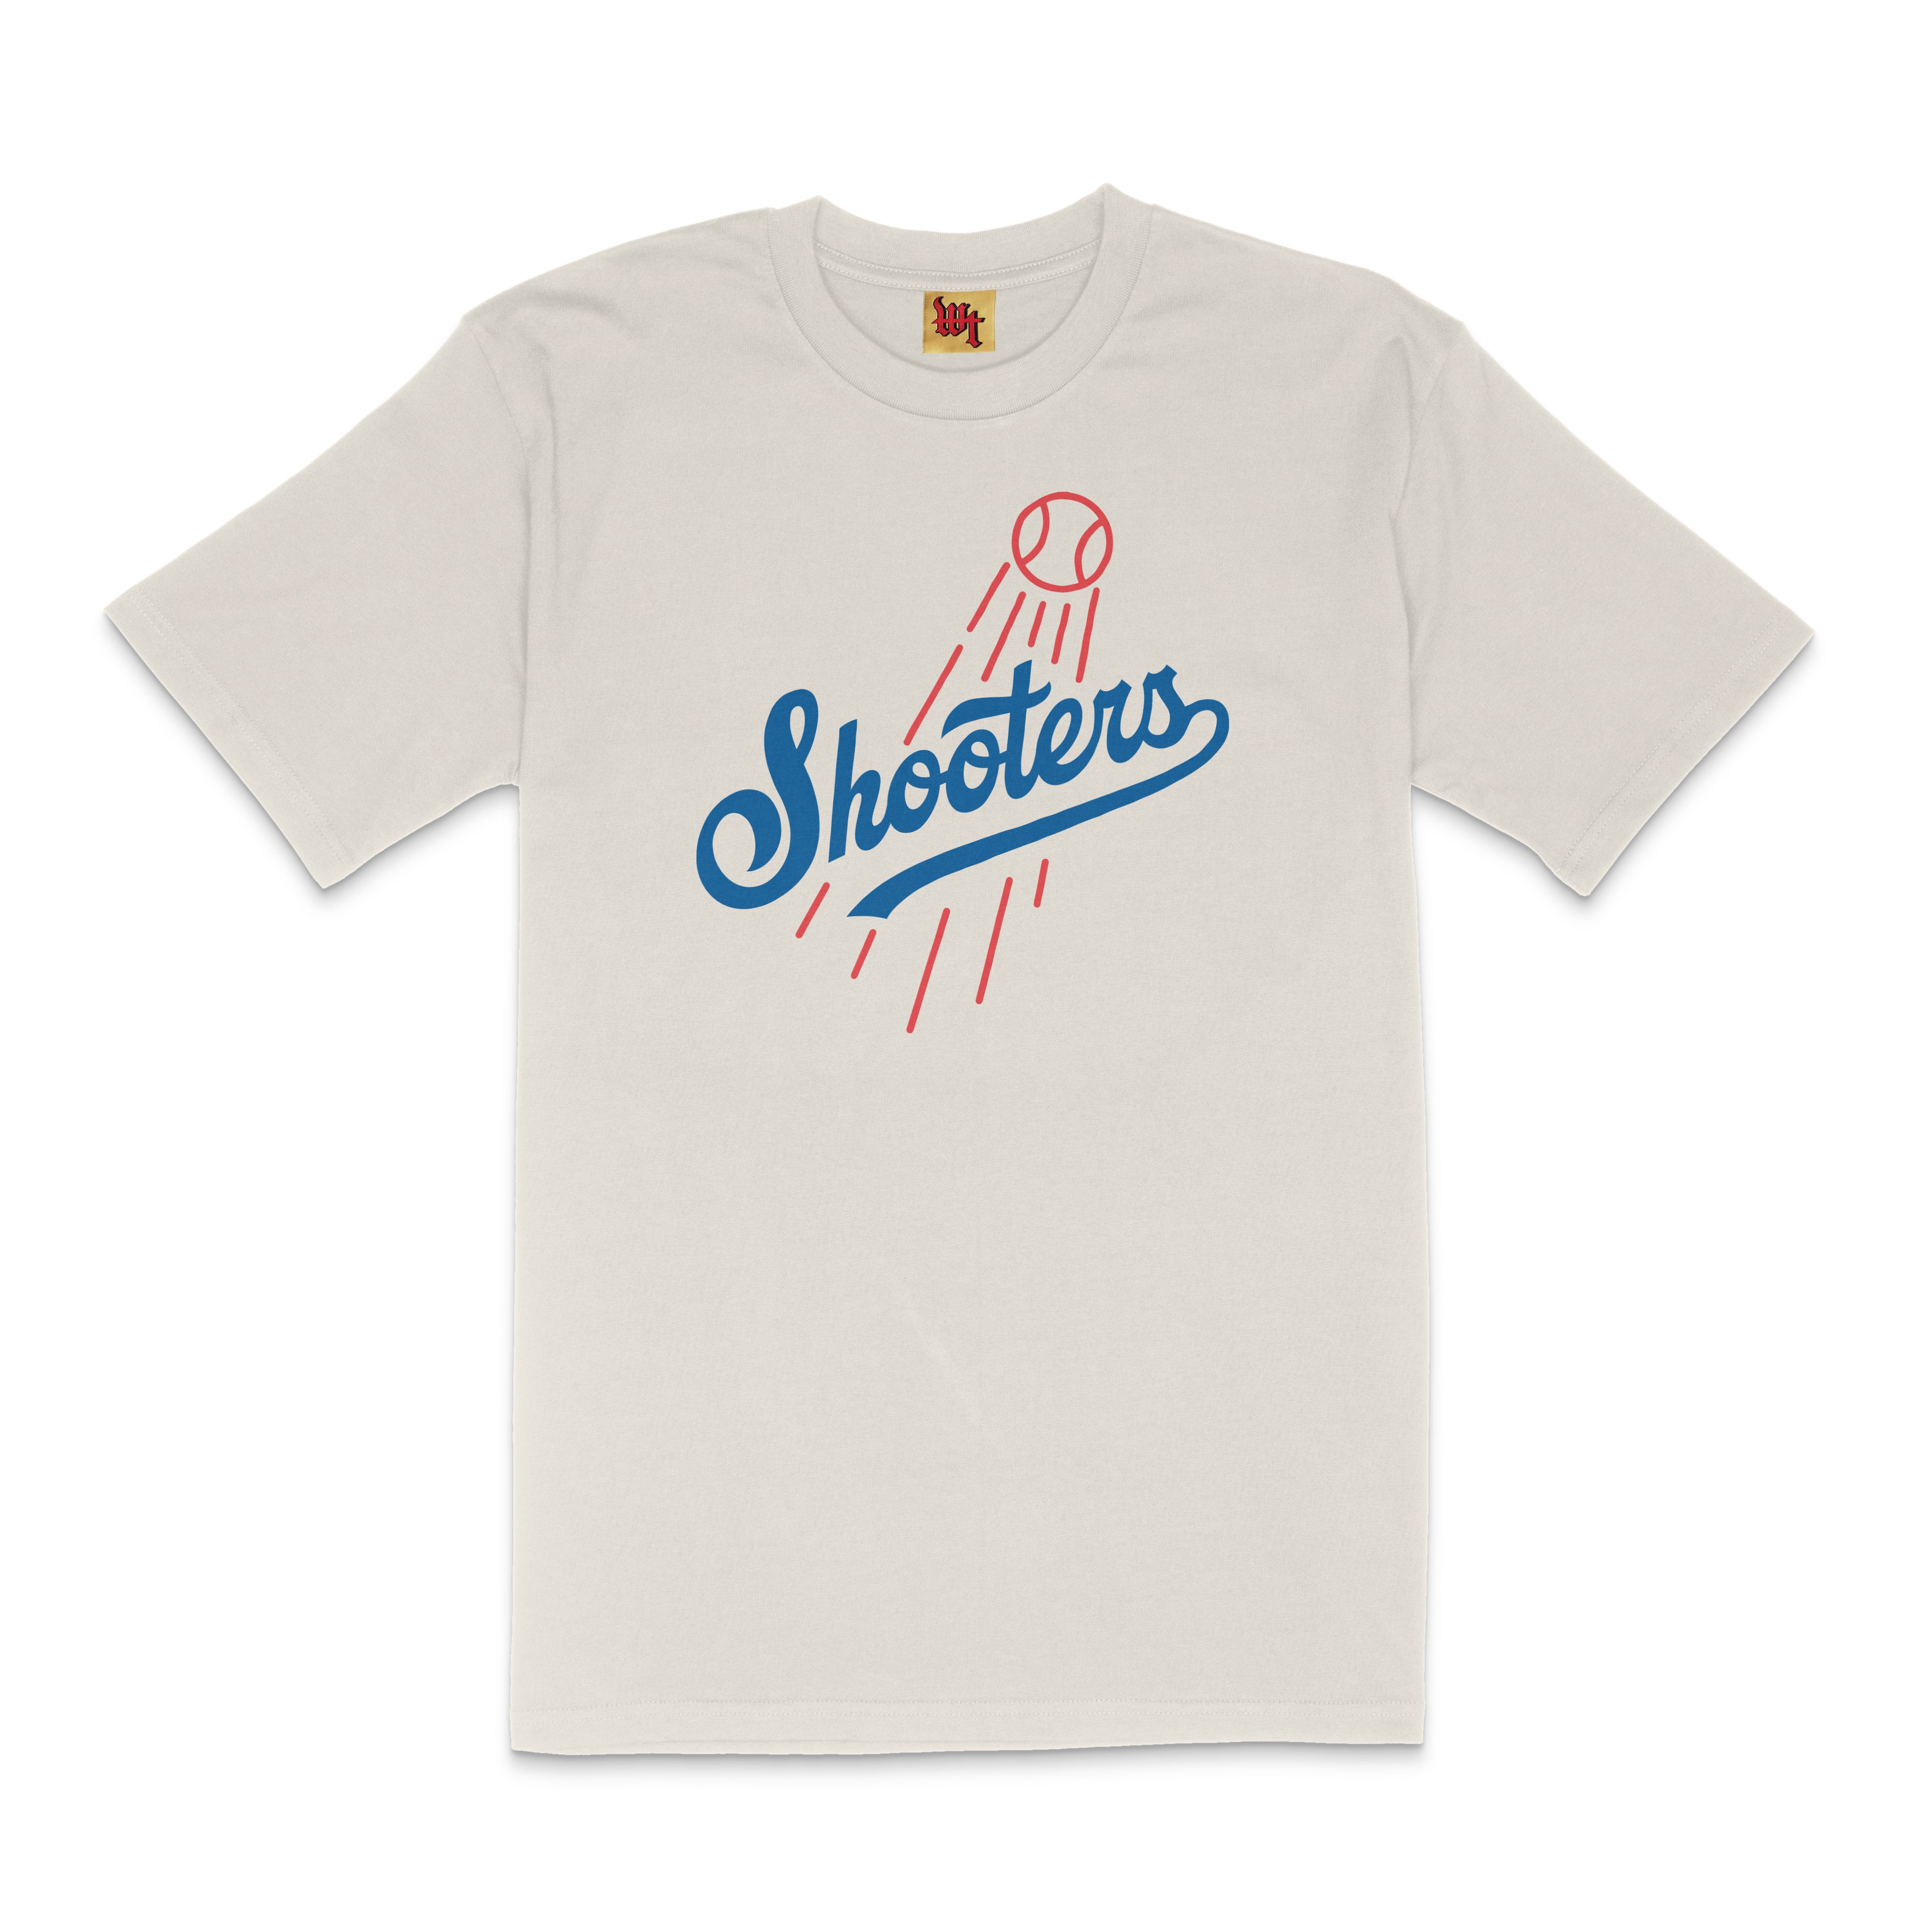 "Shooters" T-Shirt